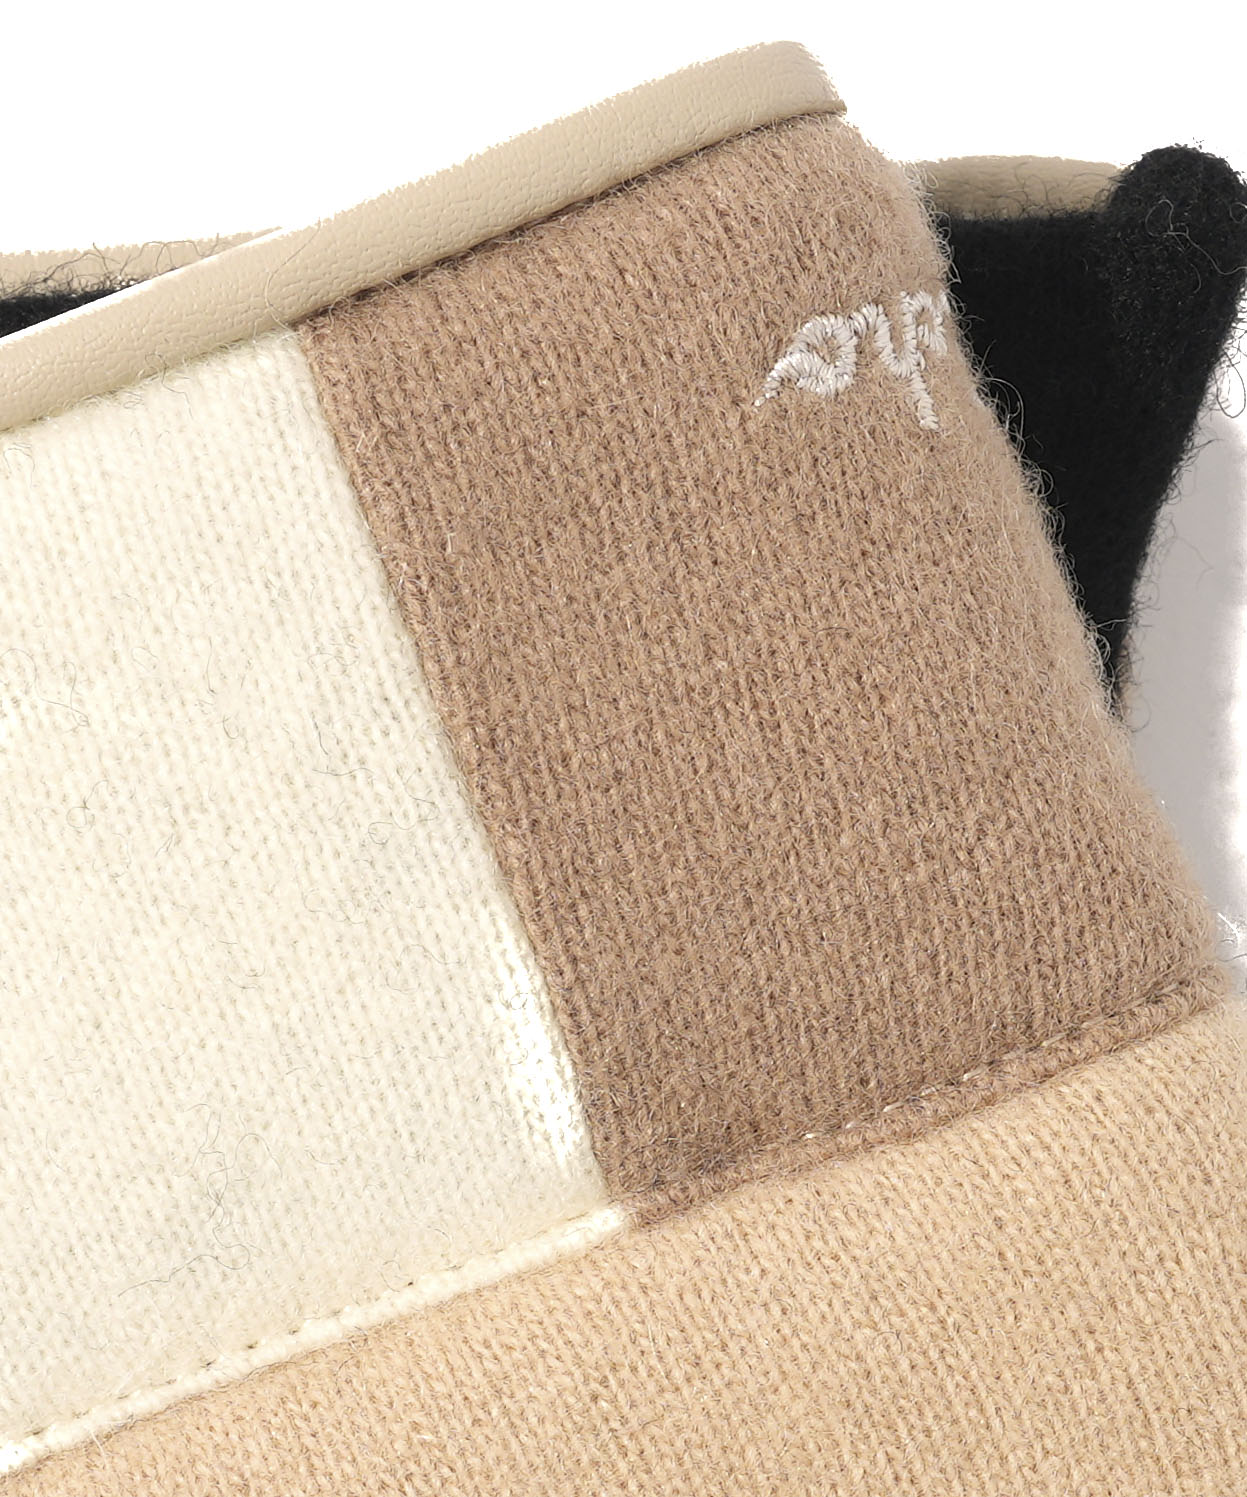 Wool Blend Patchwork Glove in color Teak